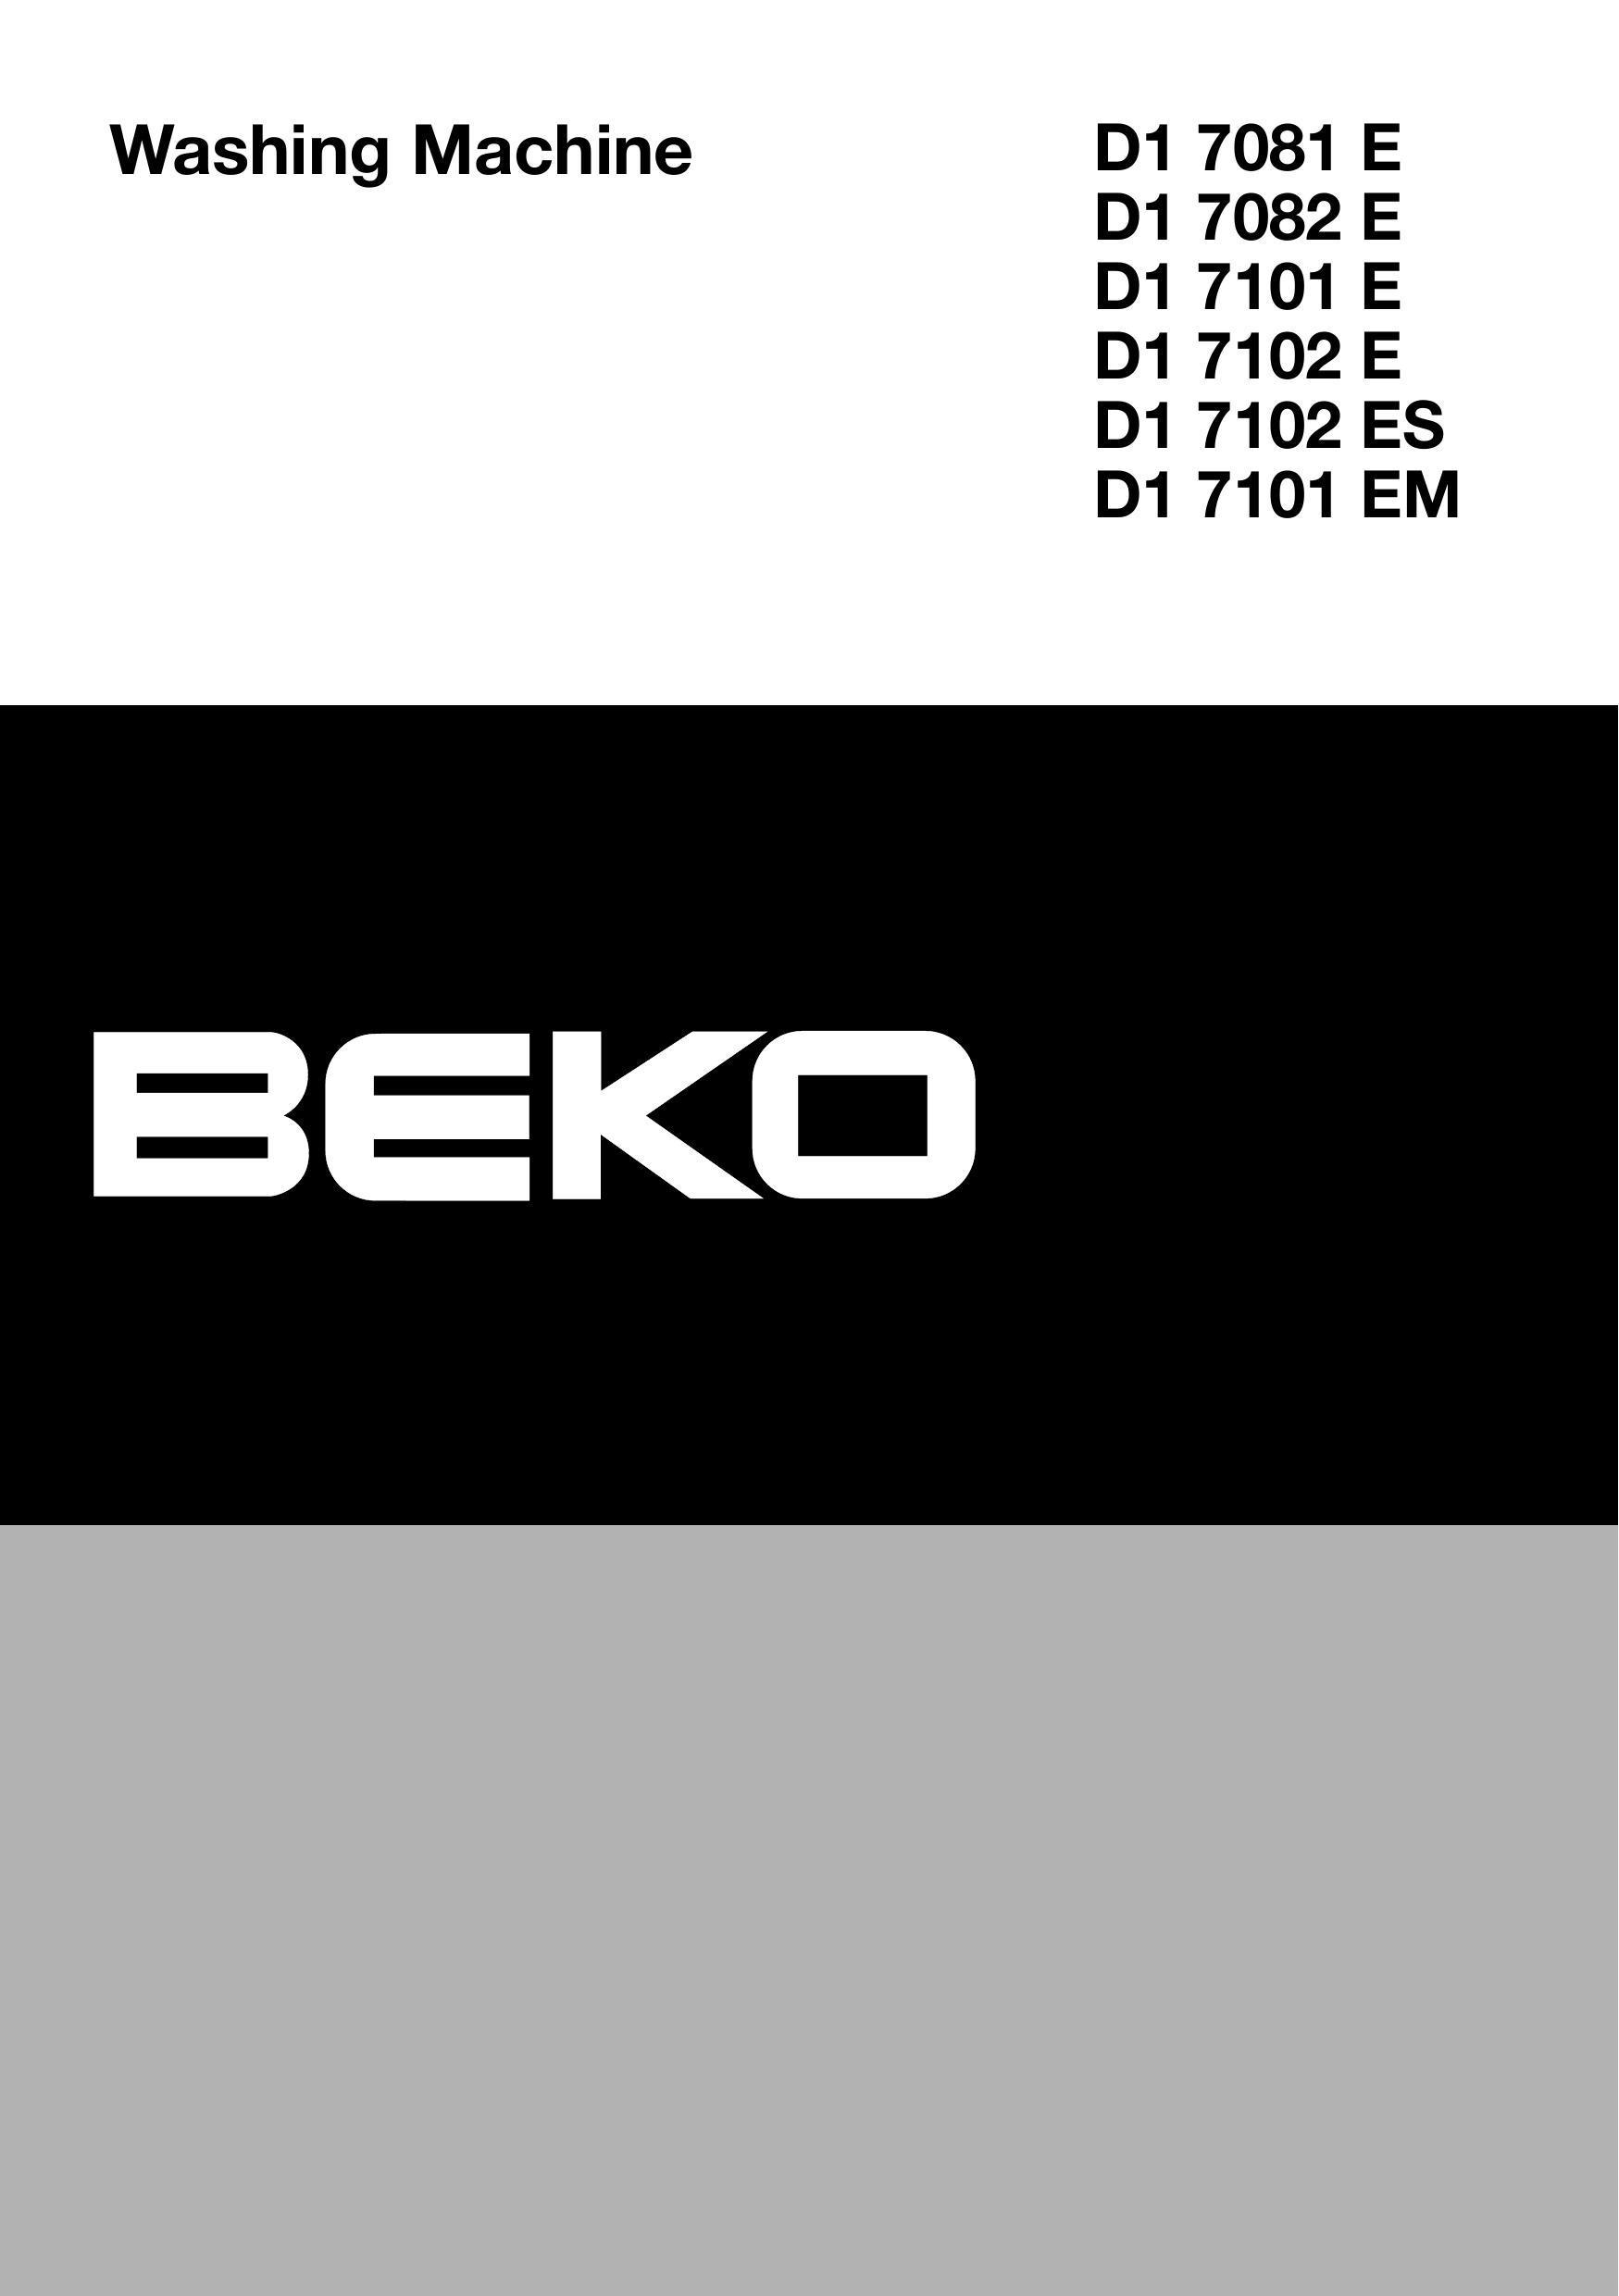 Beko D1 7102 ES Washer User Manual